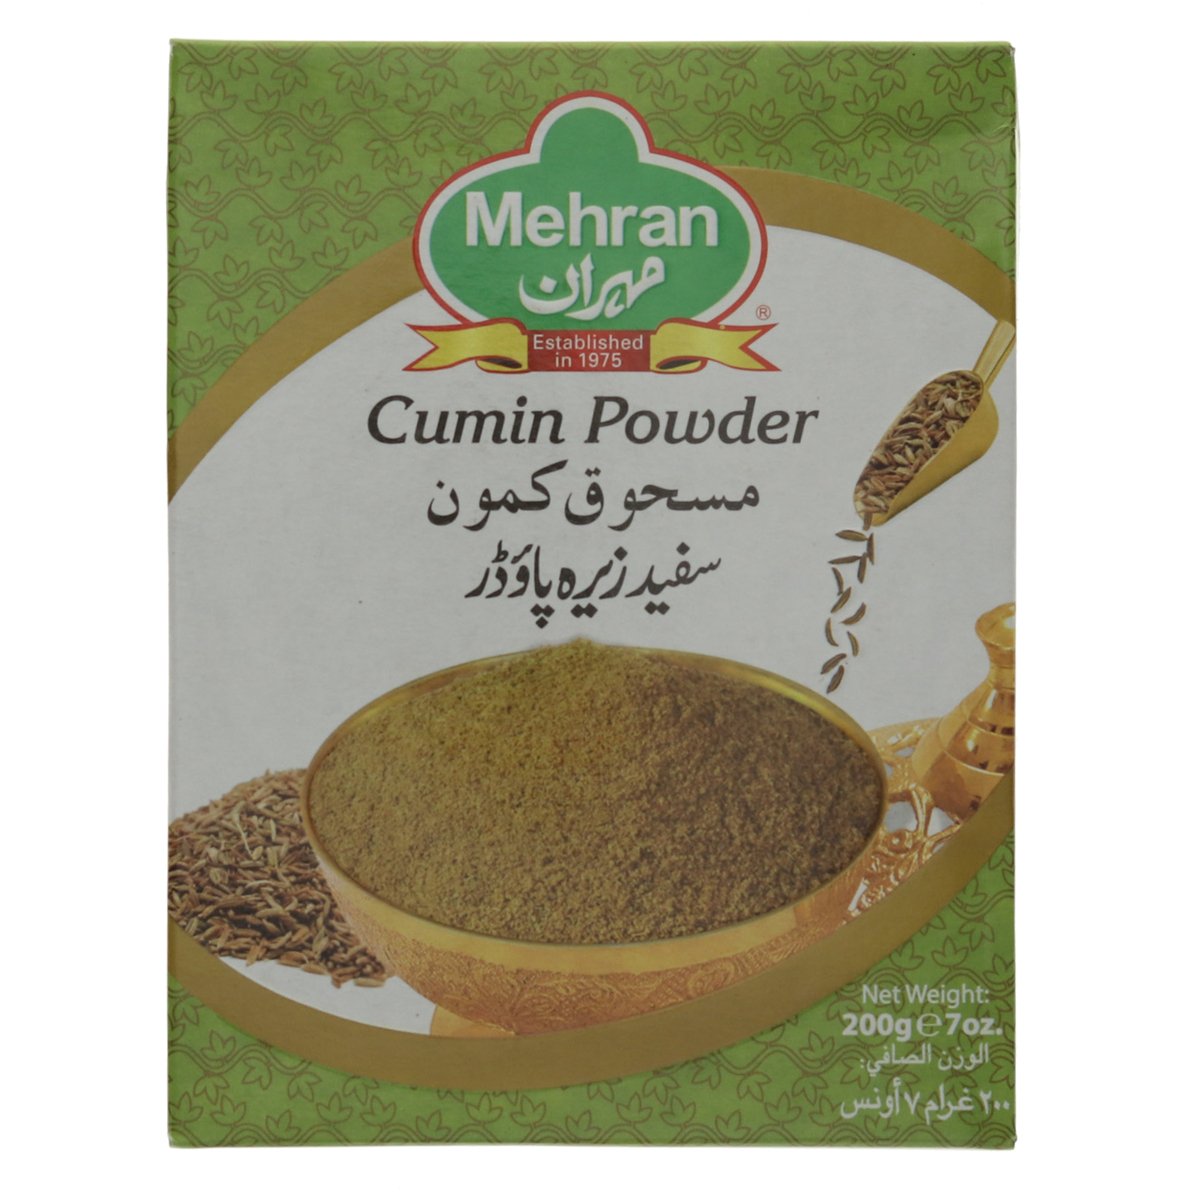 Mehran Cumin Powder 200g